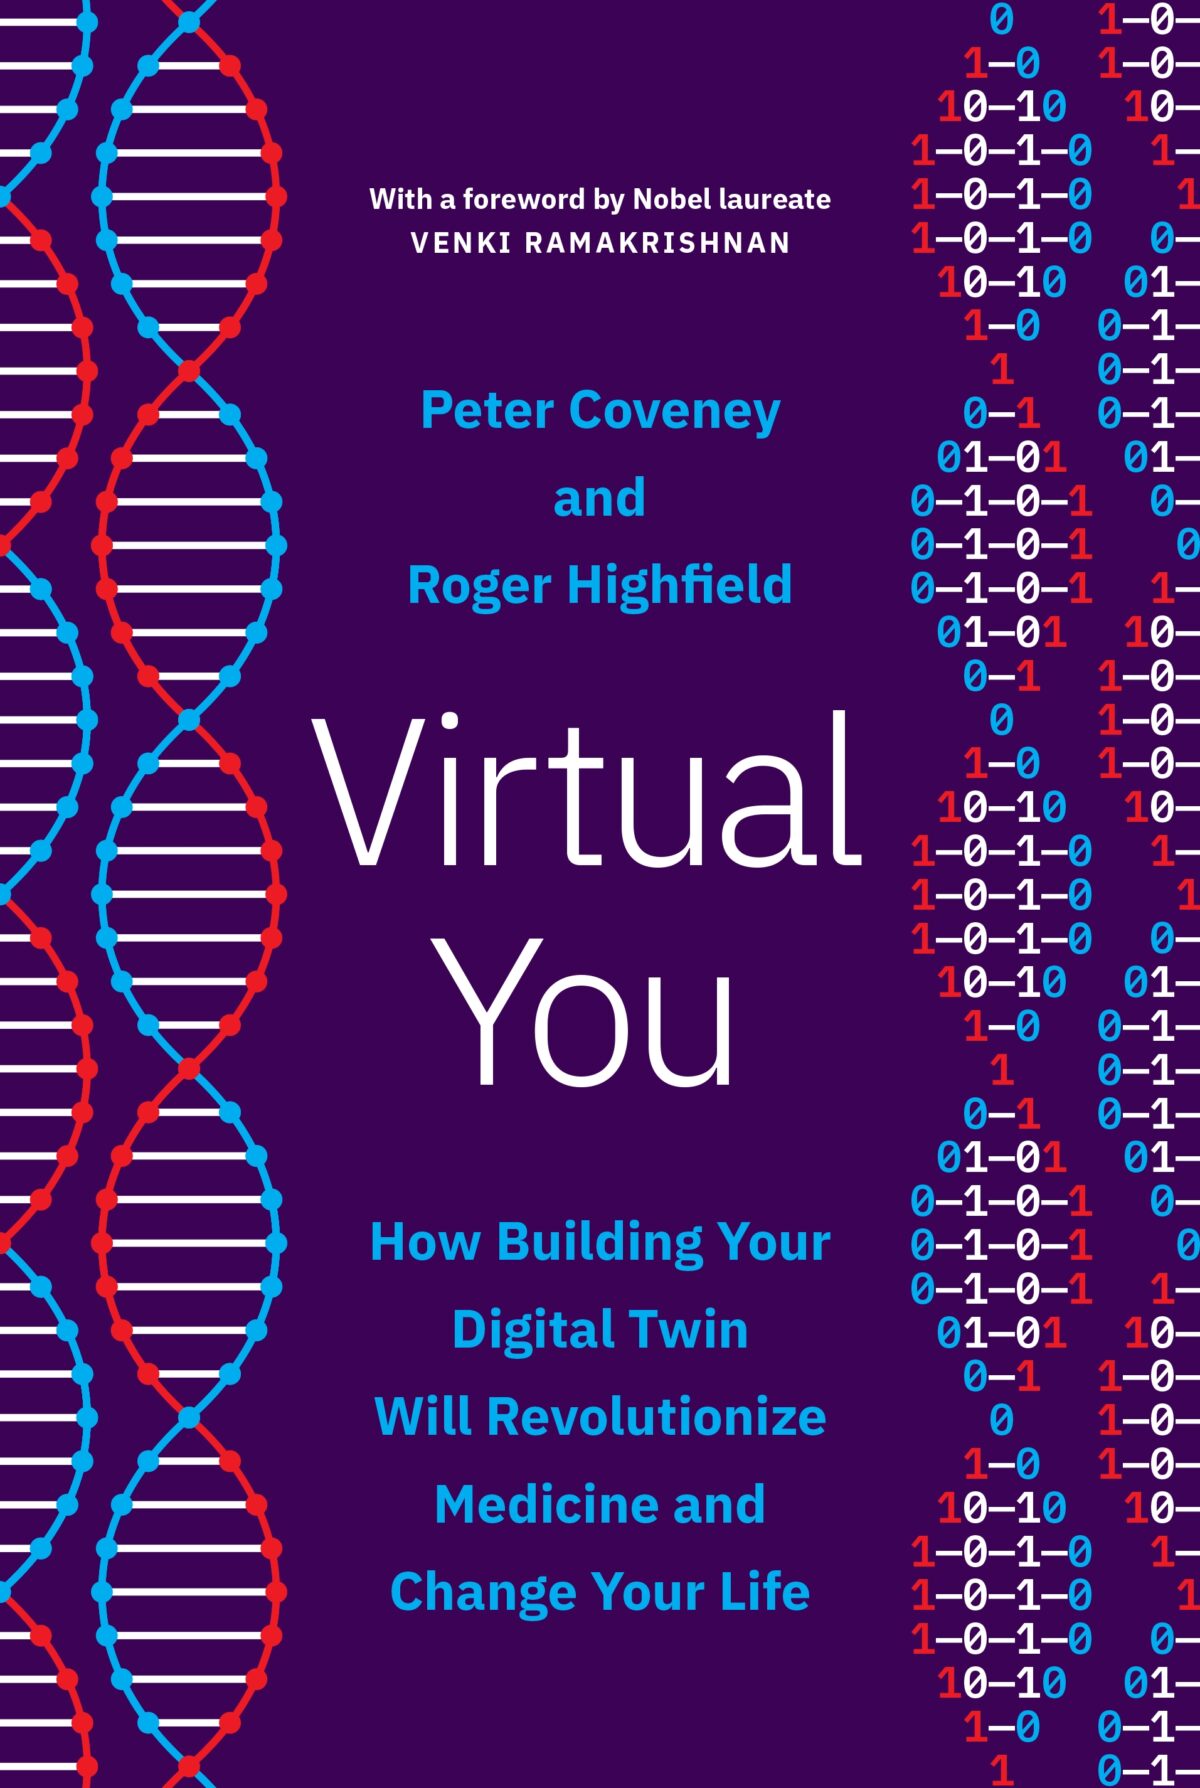 Review: Virtual You